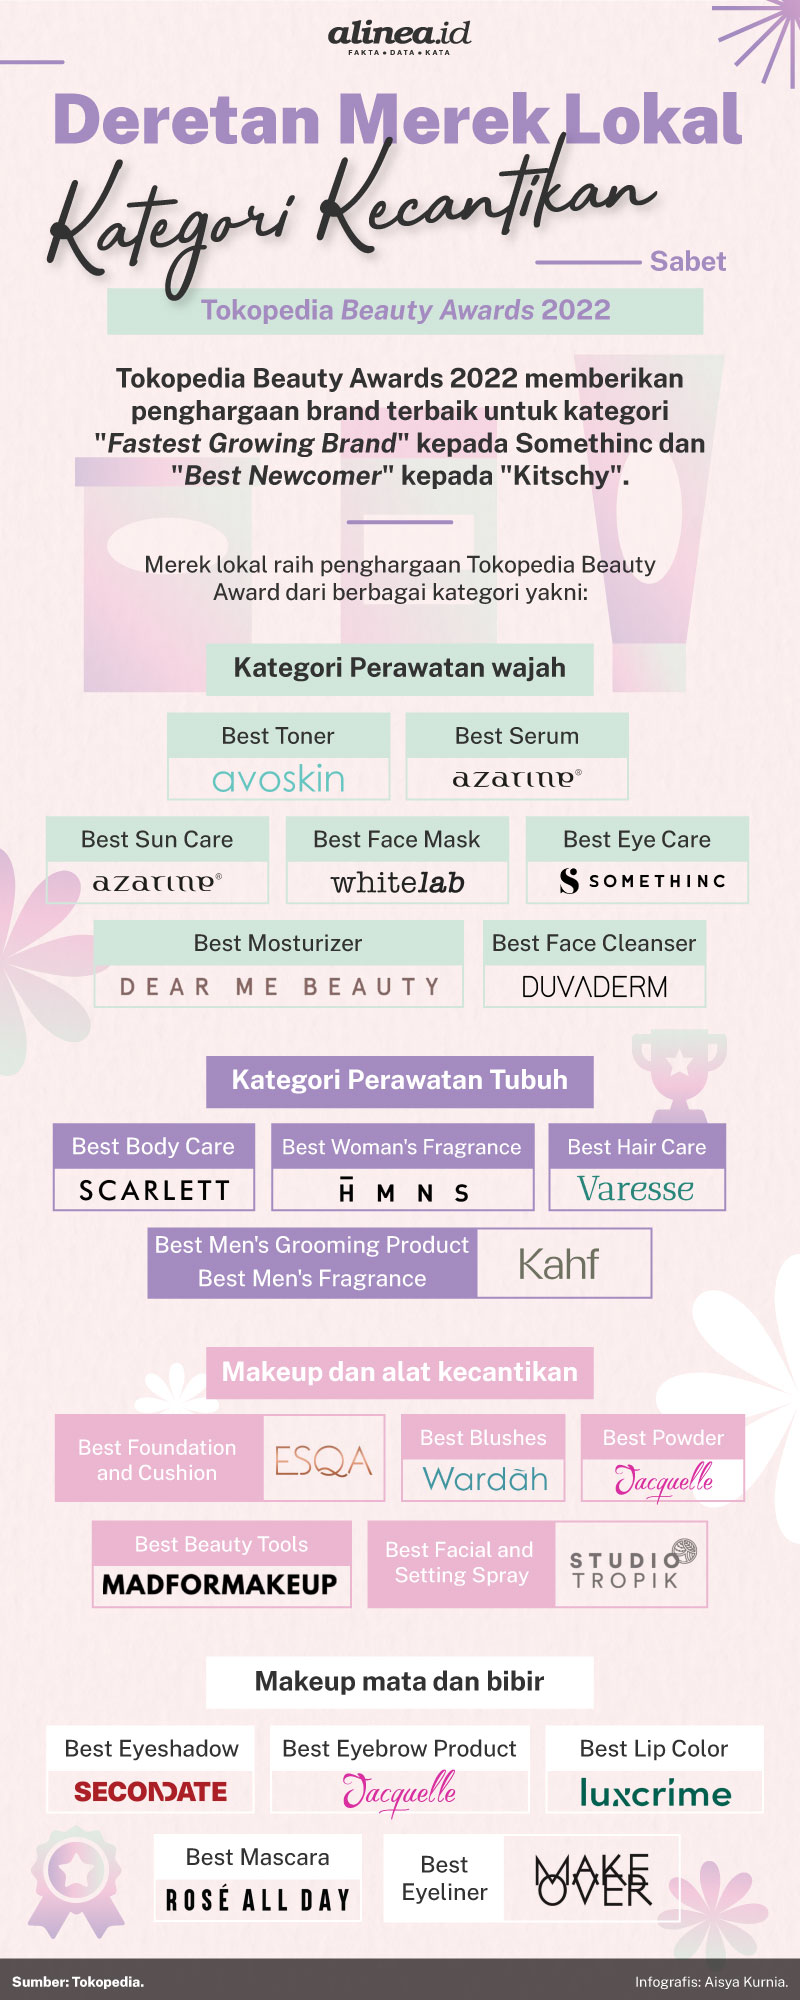 Infografik deretan merek lokal kategori kecantikan sabet Tokopedia Beauty Awards 2022. Alinea.id/Aisya Kurnia.